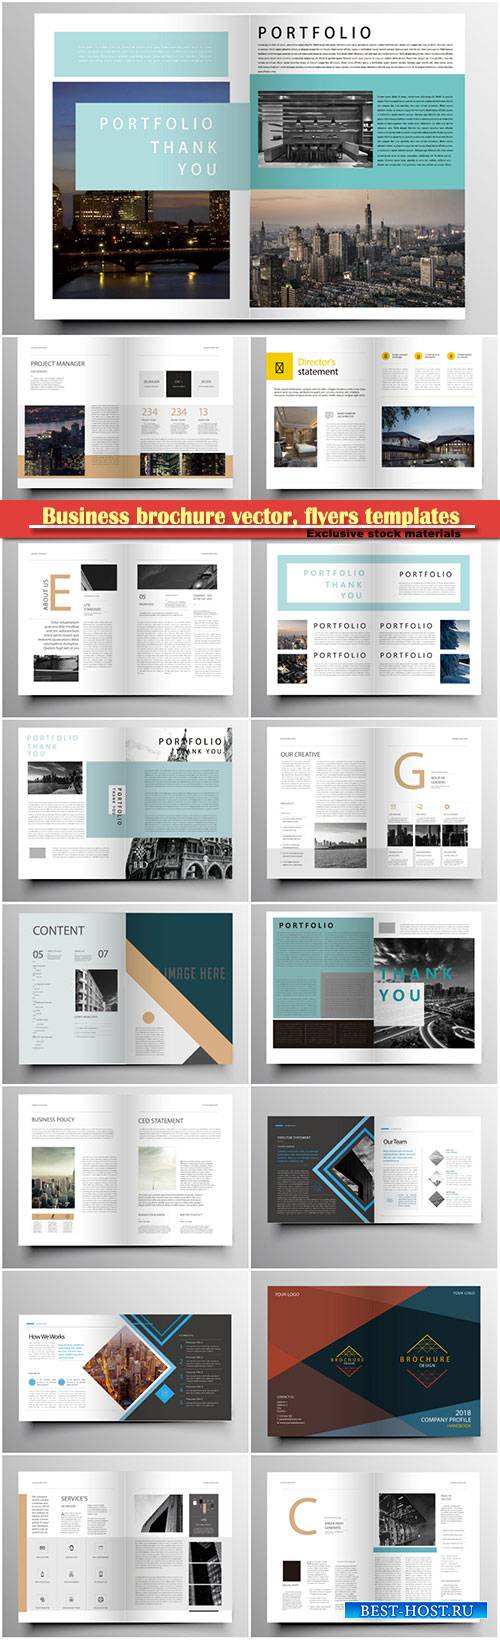 Business brochure vector, flyers templates, report cover design # 85